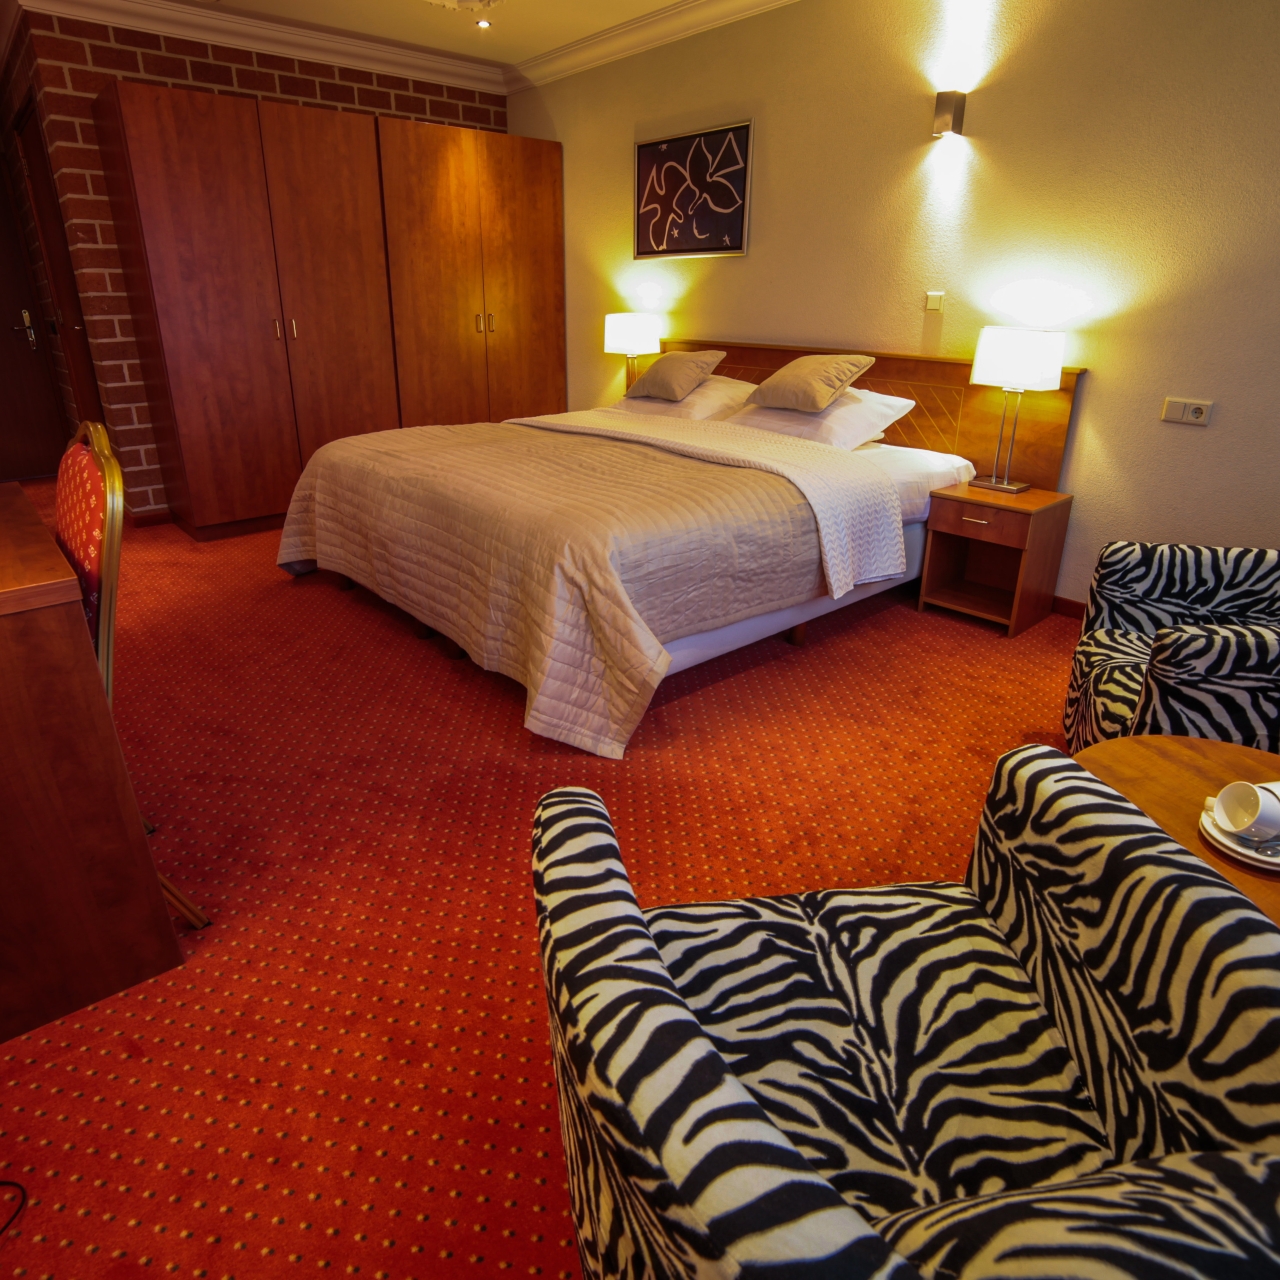 Amicitia Hotel - 4 HRS star hotel in Sneek (Friesland)